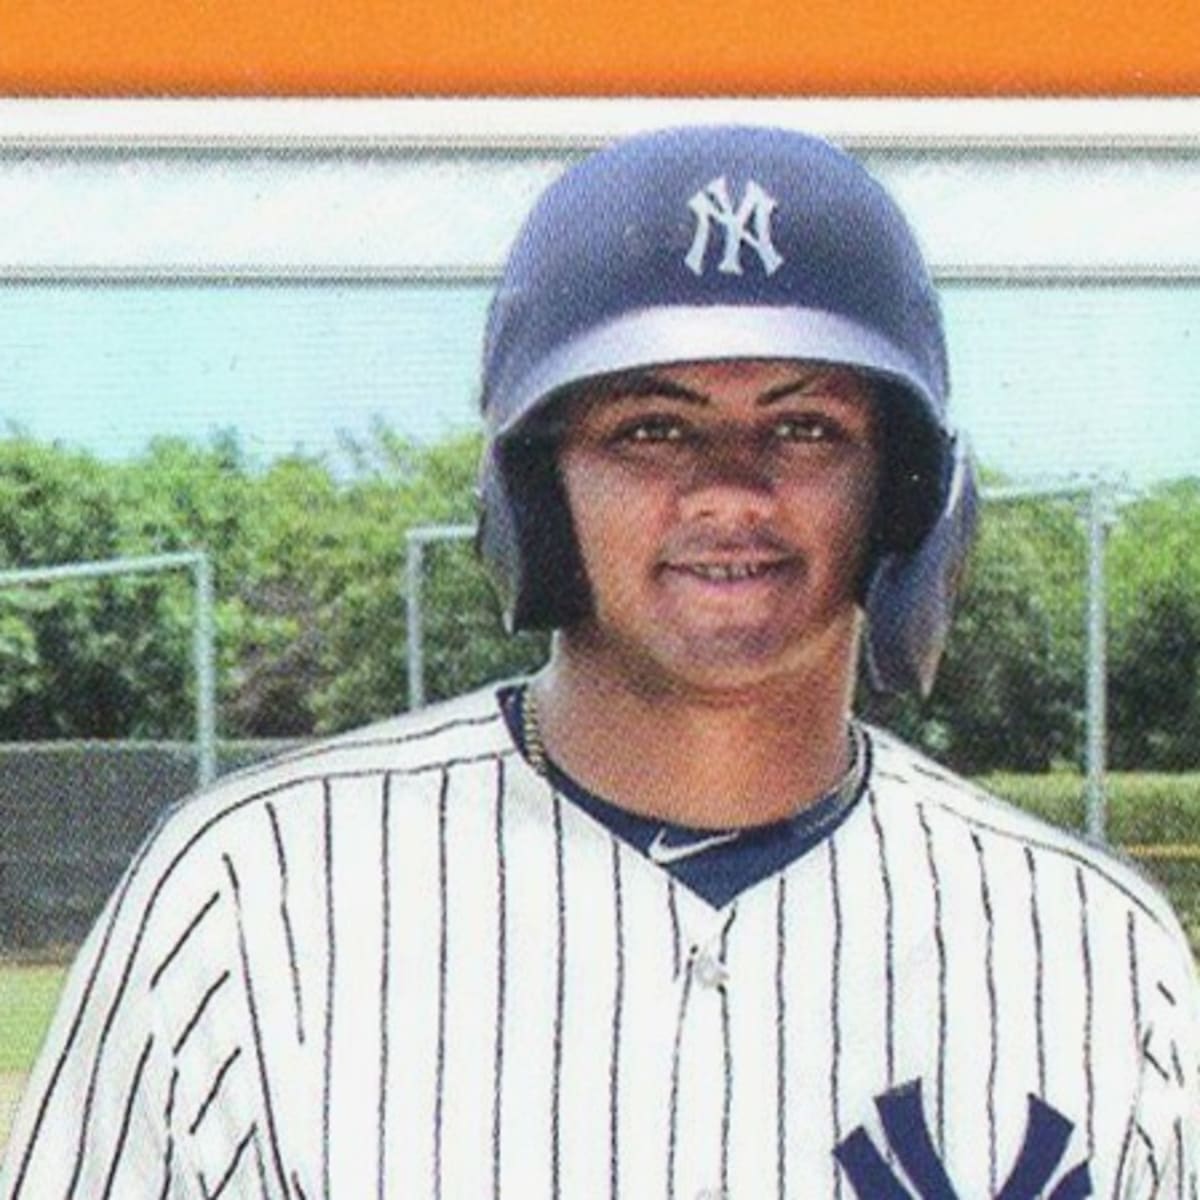 Yankees Top Prospect Jasson Dominguez Hasn't Had A Pro At-Bat, But